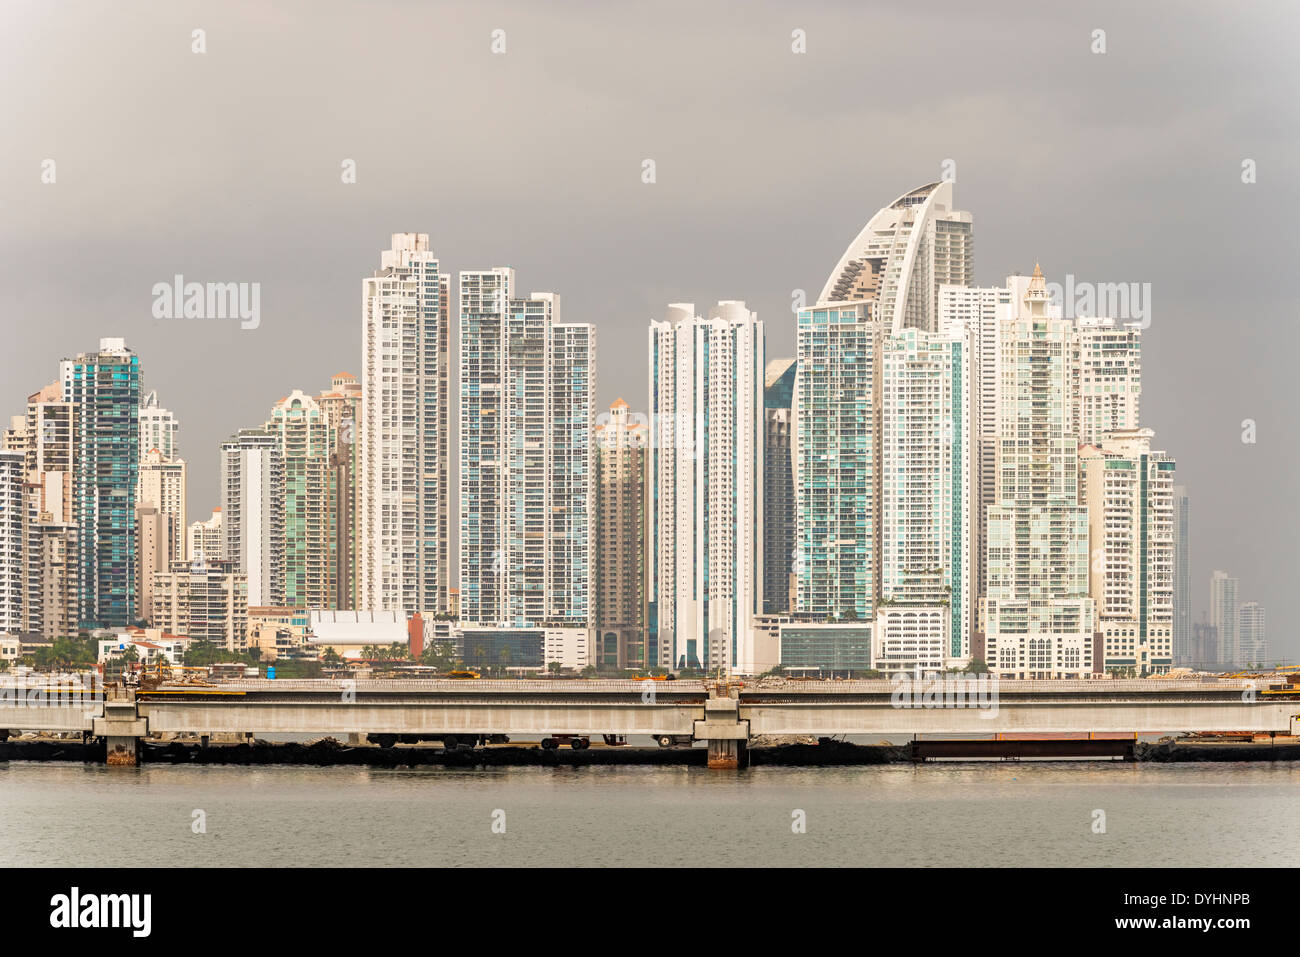 Panama city, Panama - January 2, 2014: Panama City skyscrapers skyline, Panama financial district, on sunny day. Stock Photo